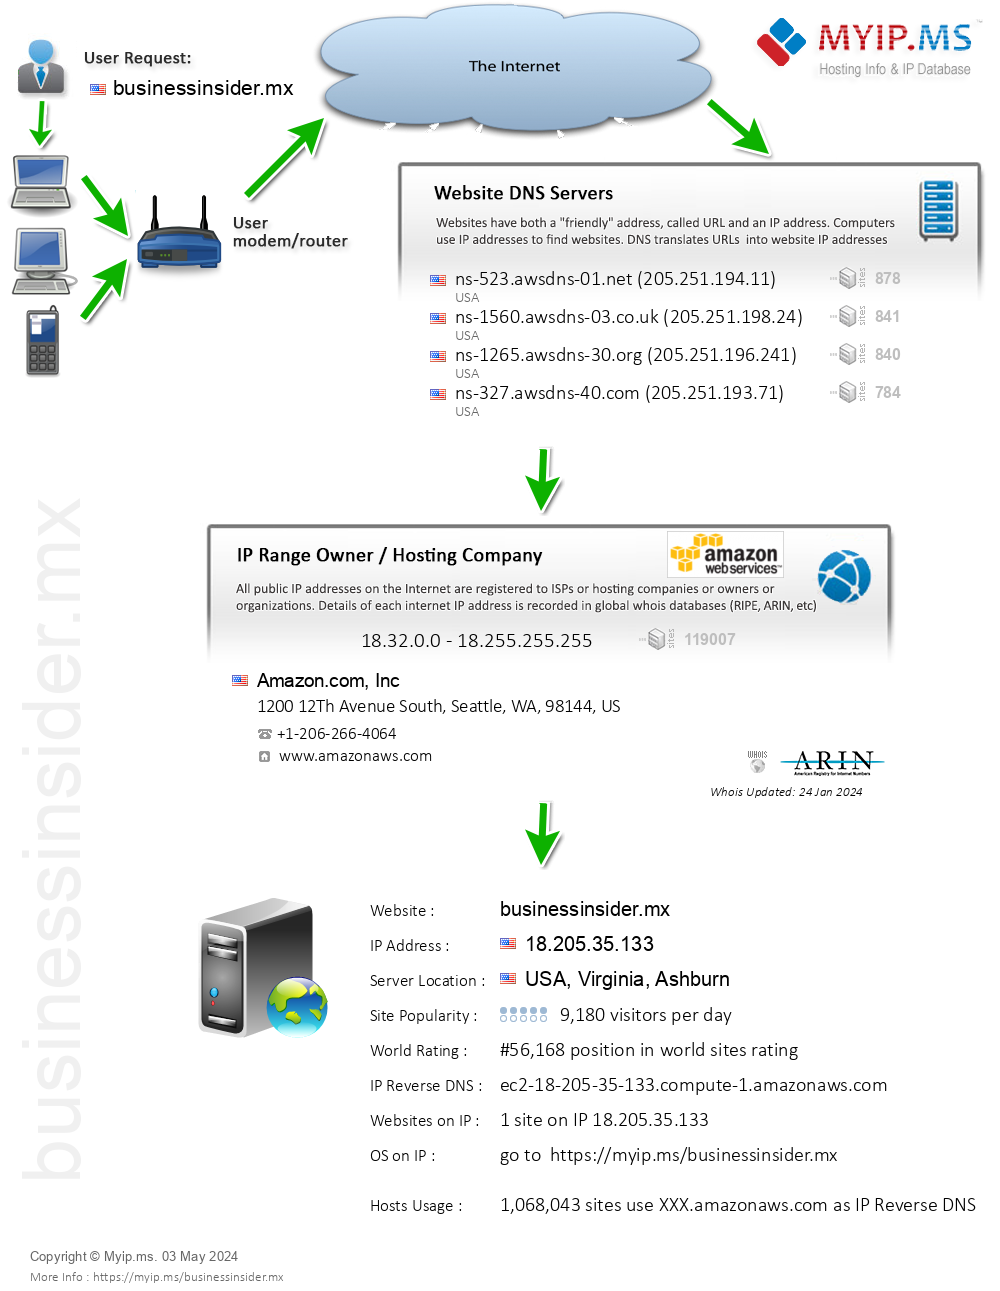 Businessinsider.mx - Website Hosting Visual IP Diagram